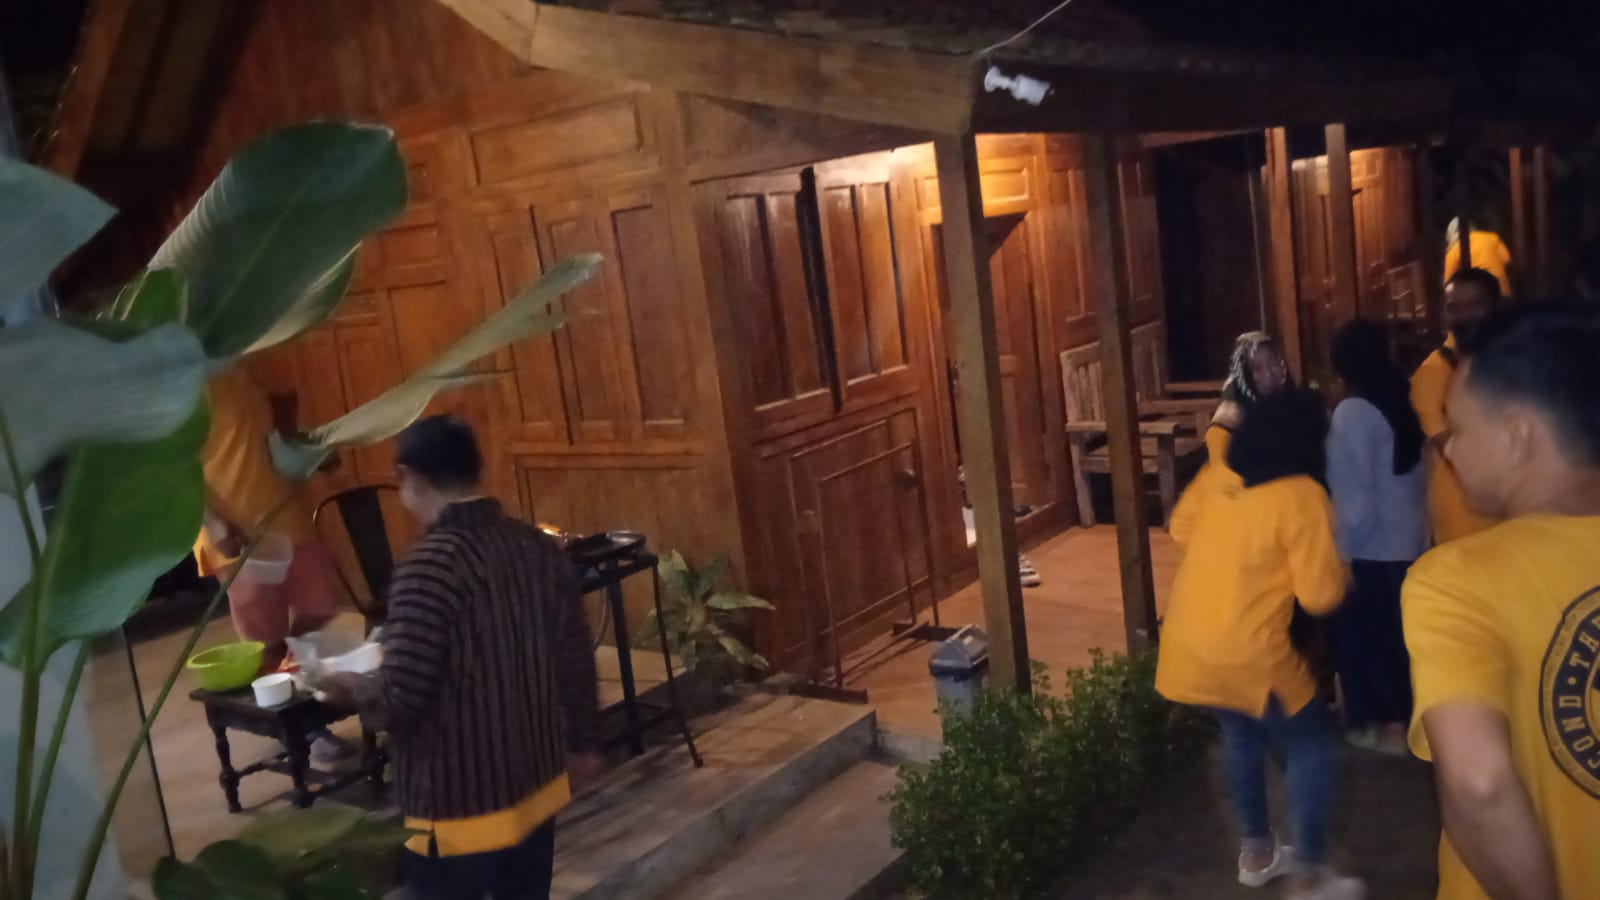 Others 5, Warmo Cottage, Pasuruan